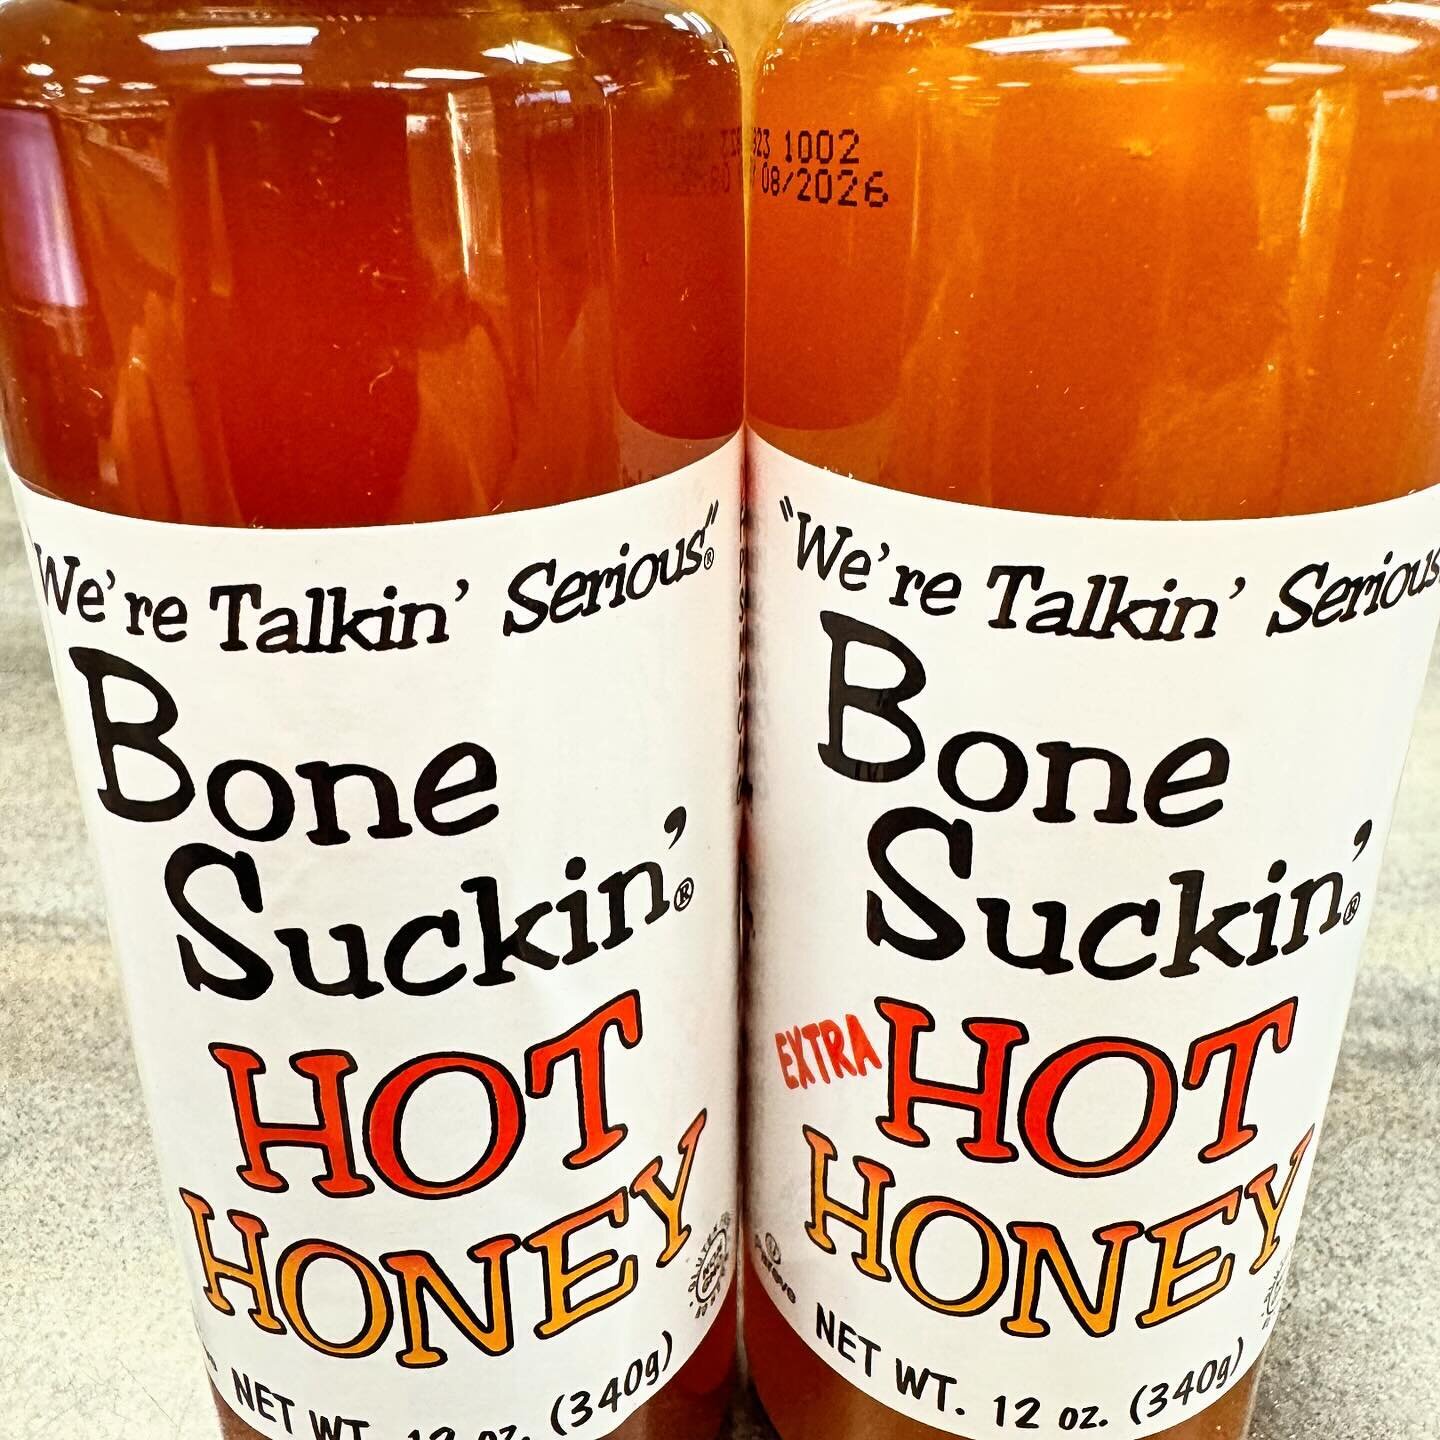 🚨NEW ITEM🚨 
-Hot Honey-
-Extra Hot Honey-

Available in store now! 
#honey #hothoney #hothoneychicken